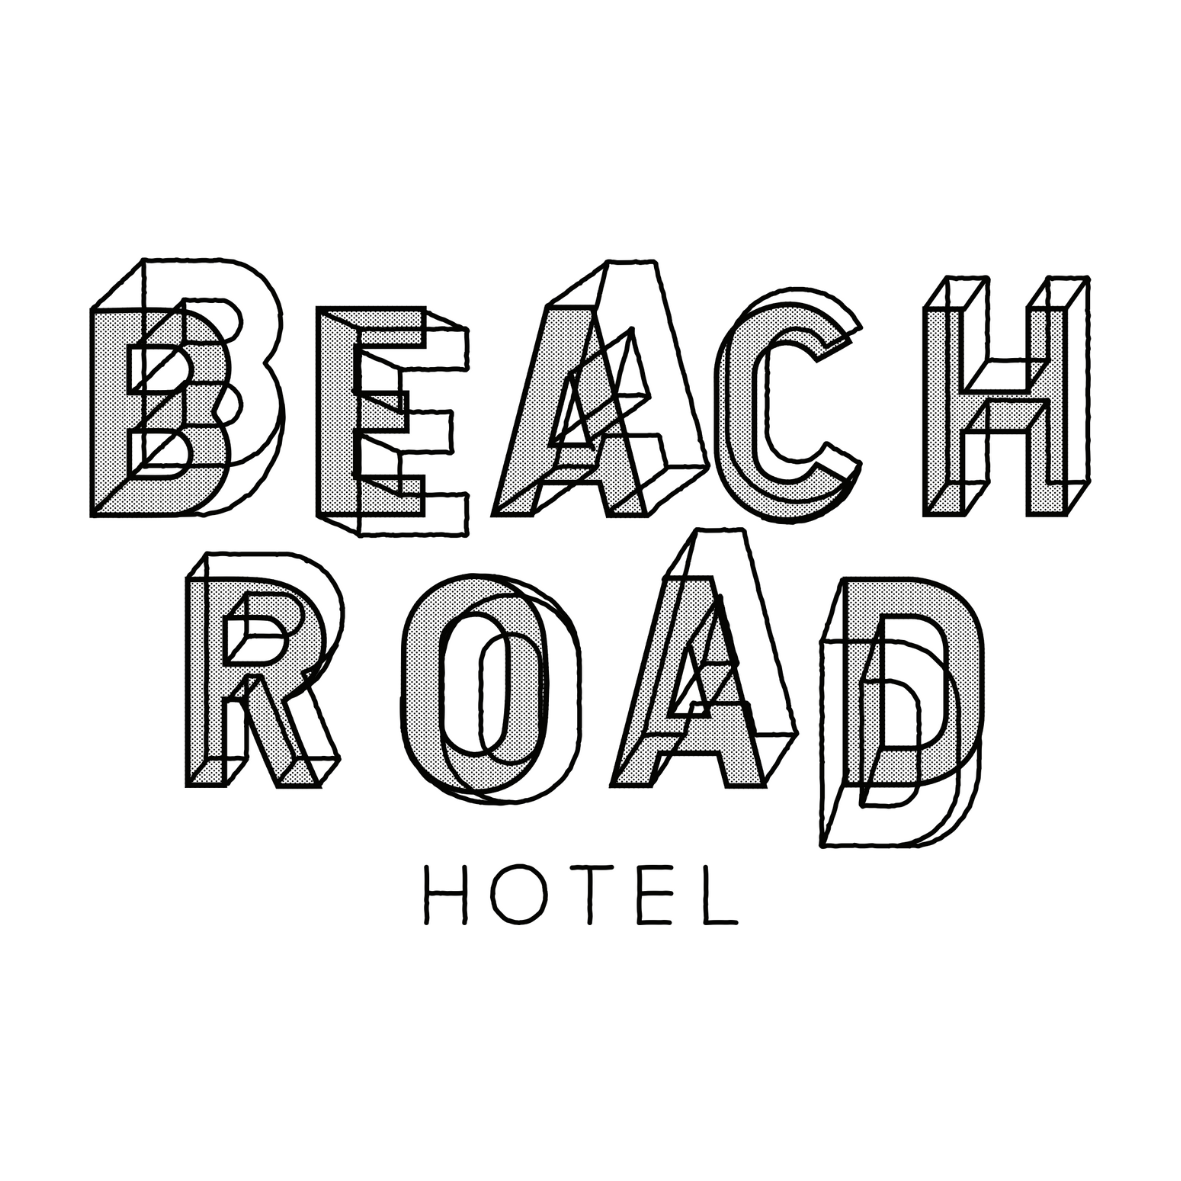 Beach Road Hotel logo